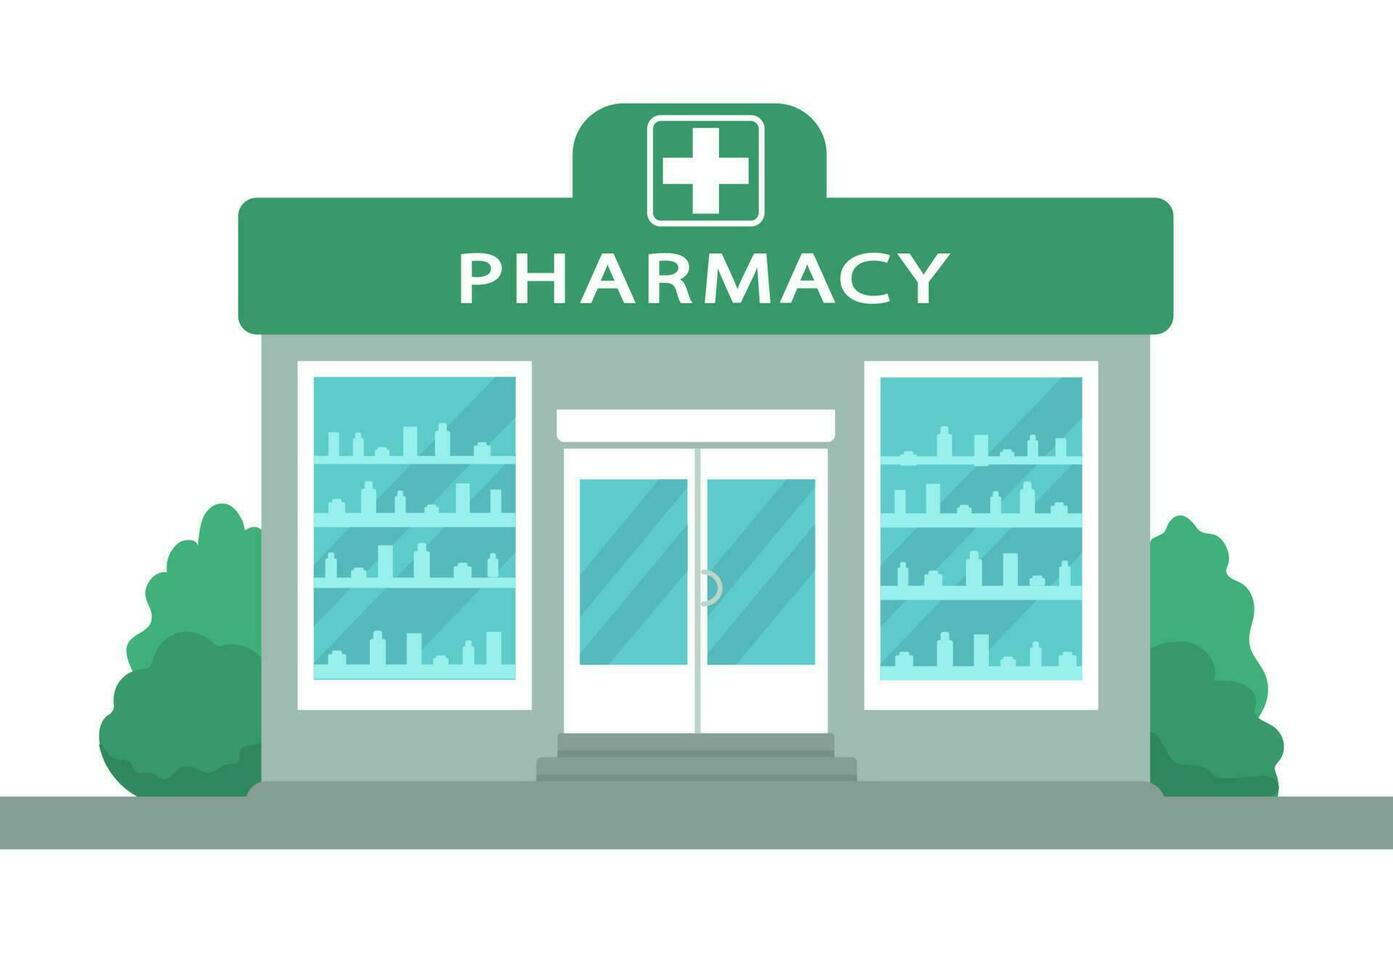 Pharmacy shop front facade icon. Vector illustration